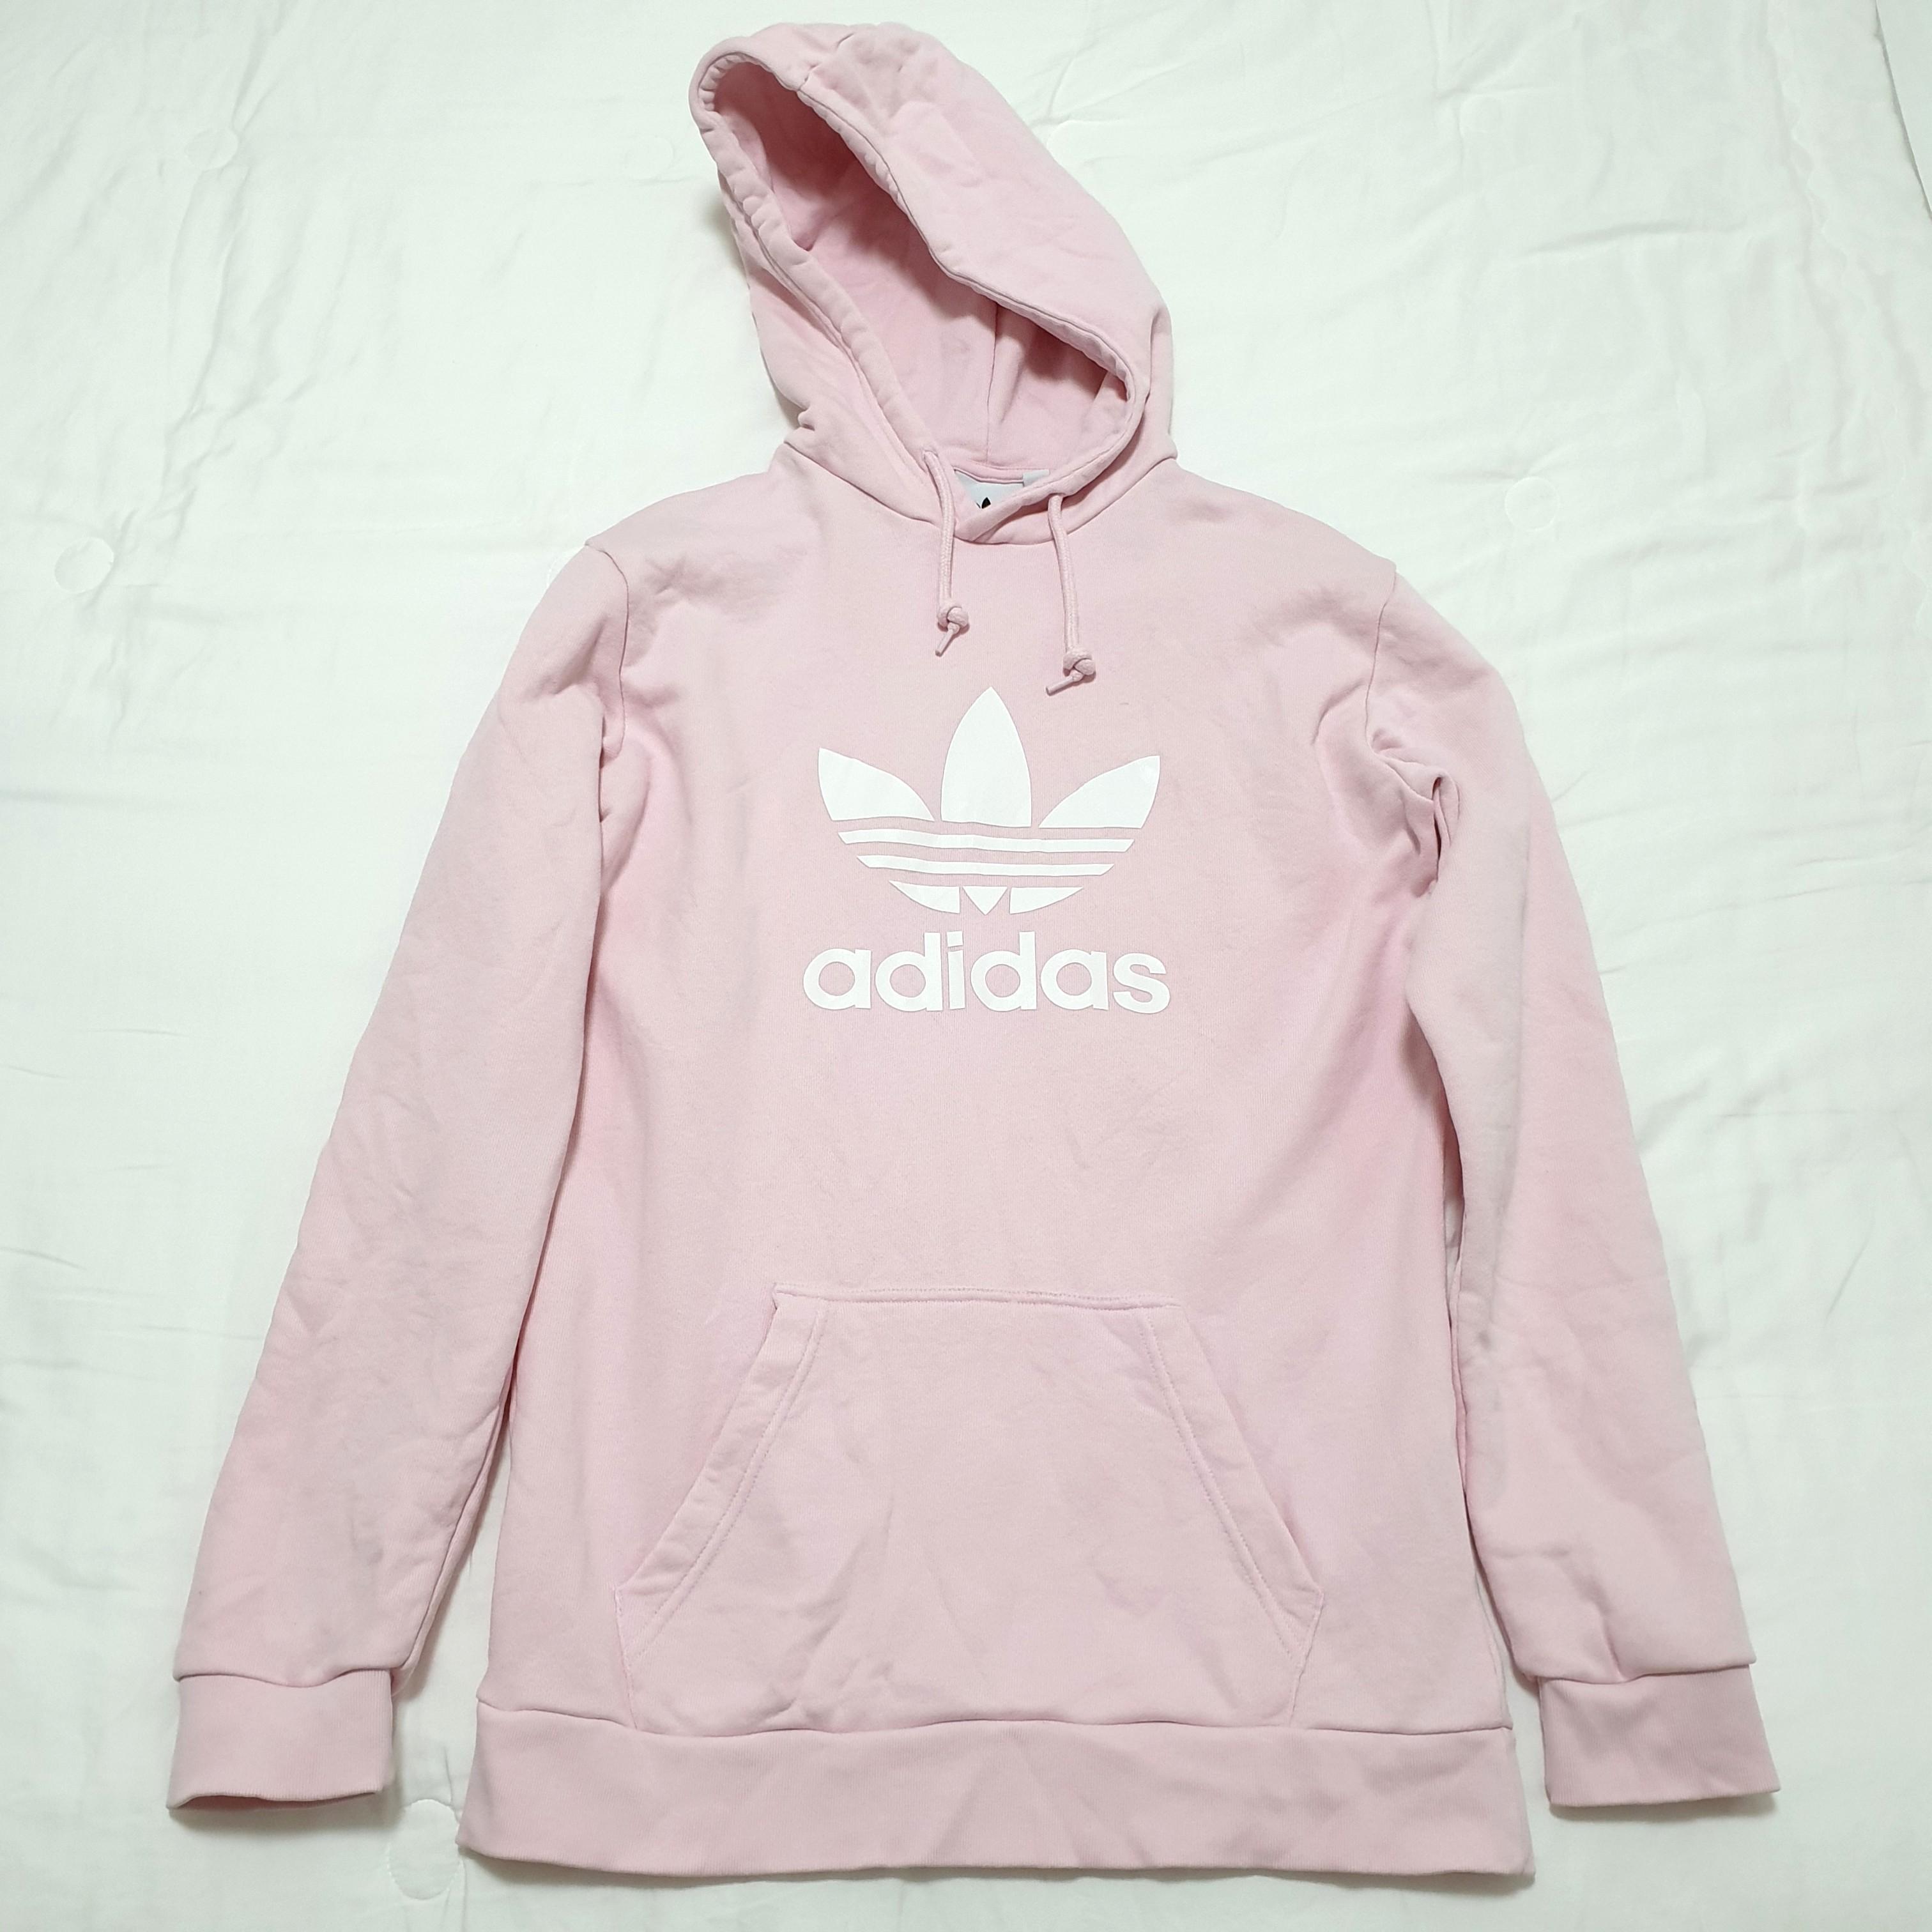 adidas trefoil hoodie light pink